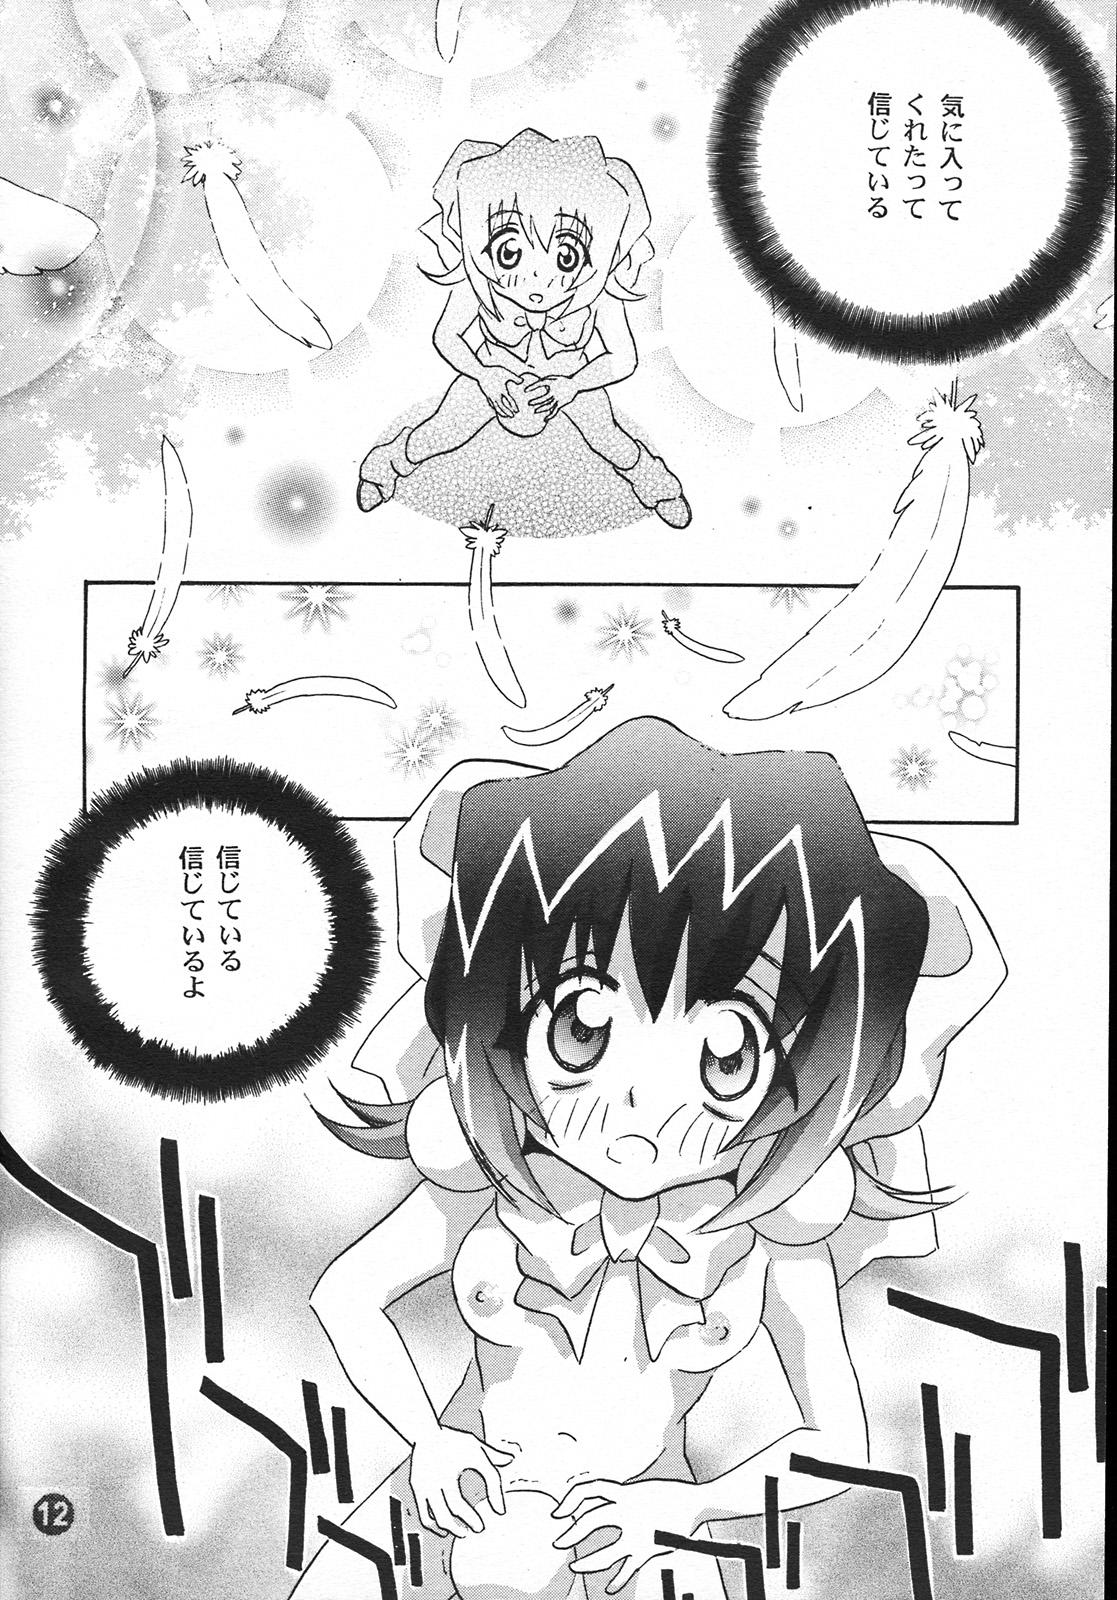 Fat PATA PATA PATAPi ! - Akihabara dennou gumi High Heels - Page 11